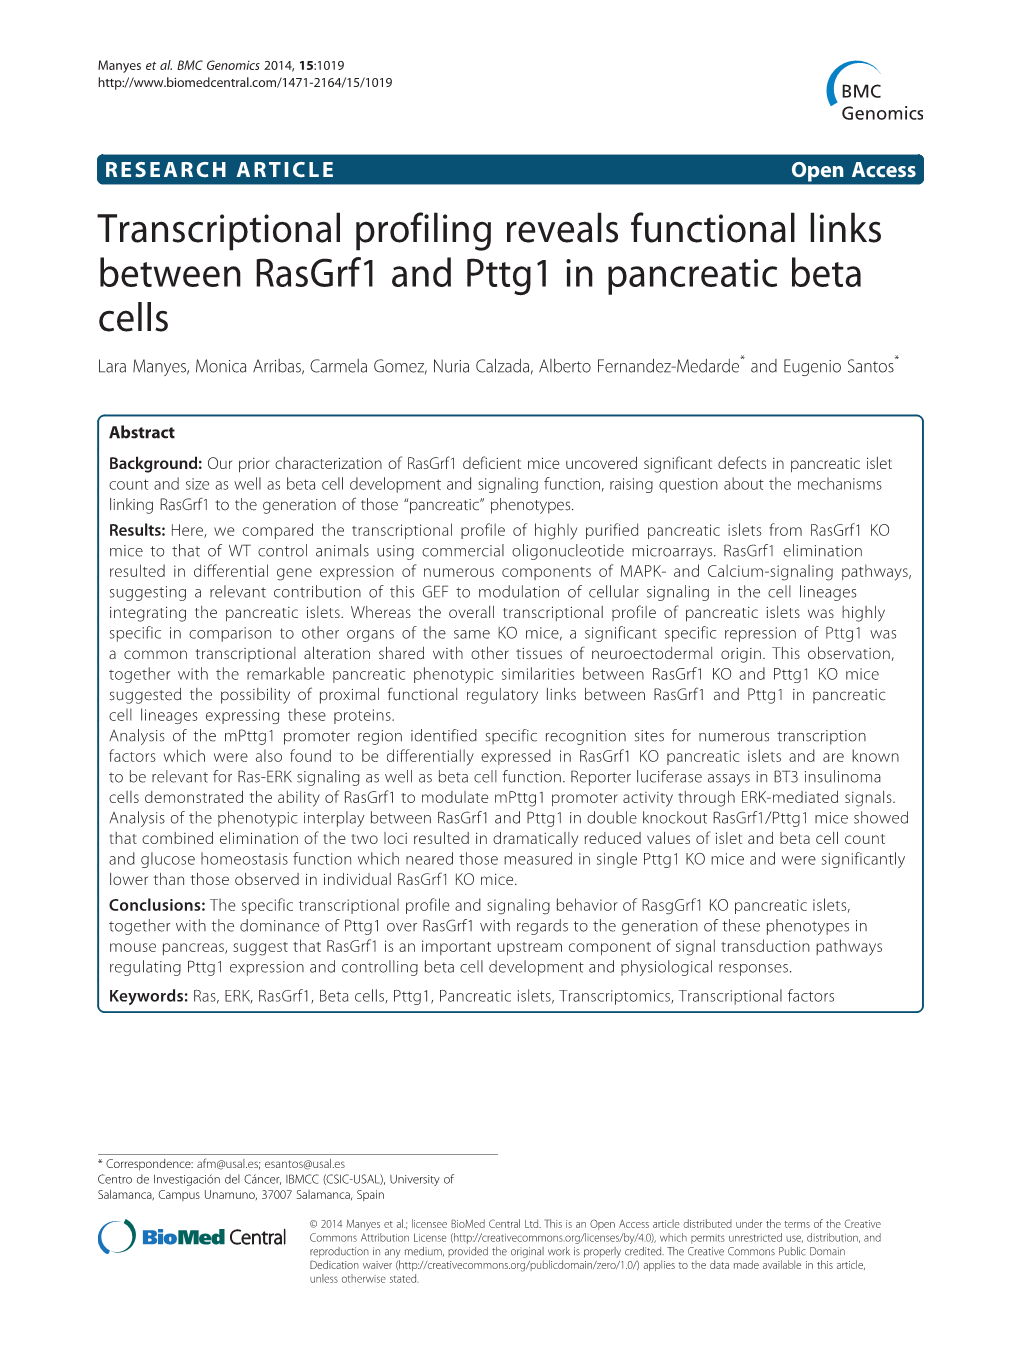 Transcriptional Profiling Reveals Functional Links Between Rasgrf1 and Pttg1 in Pancreatic Beta Cells